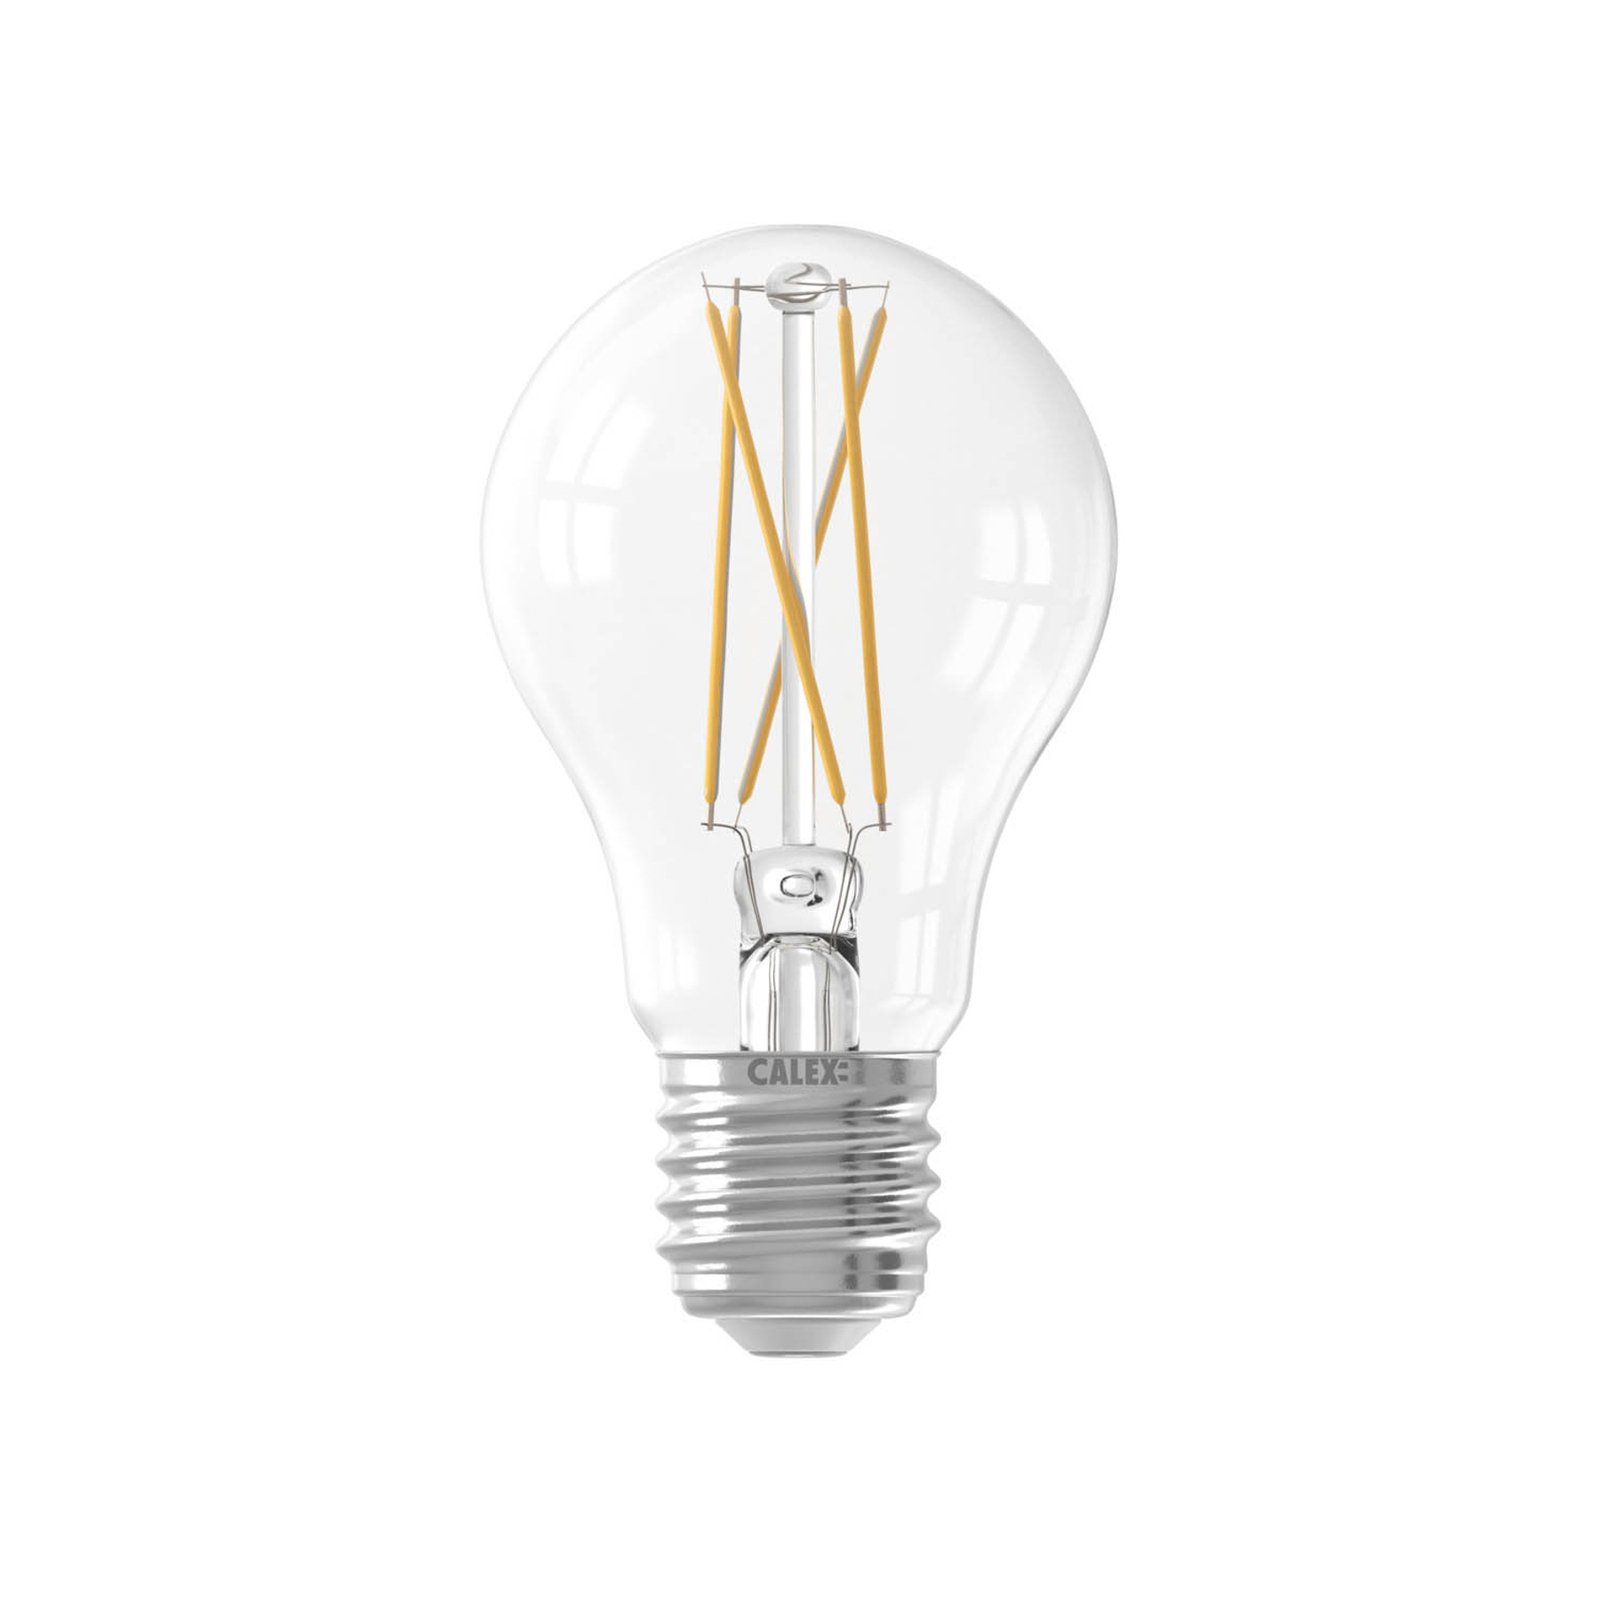 Calex smart LED lamp E27 A60 7W filament CCT